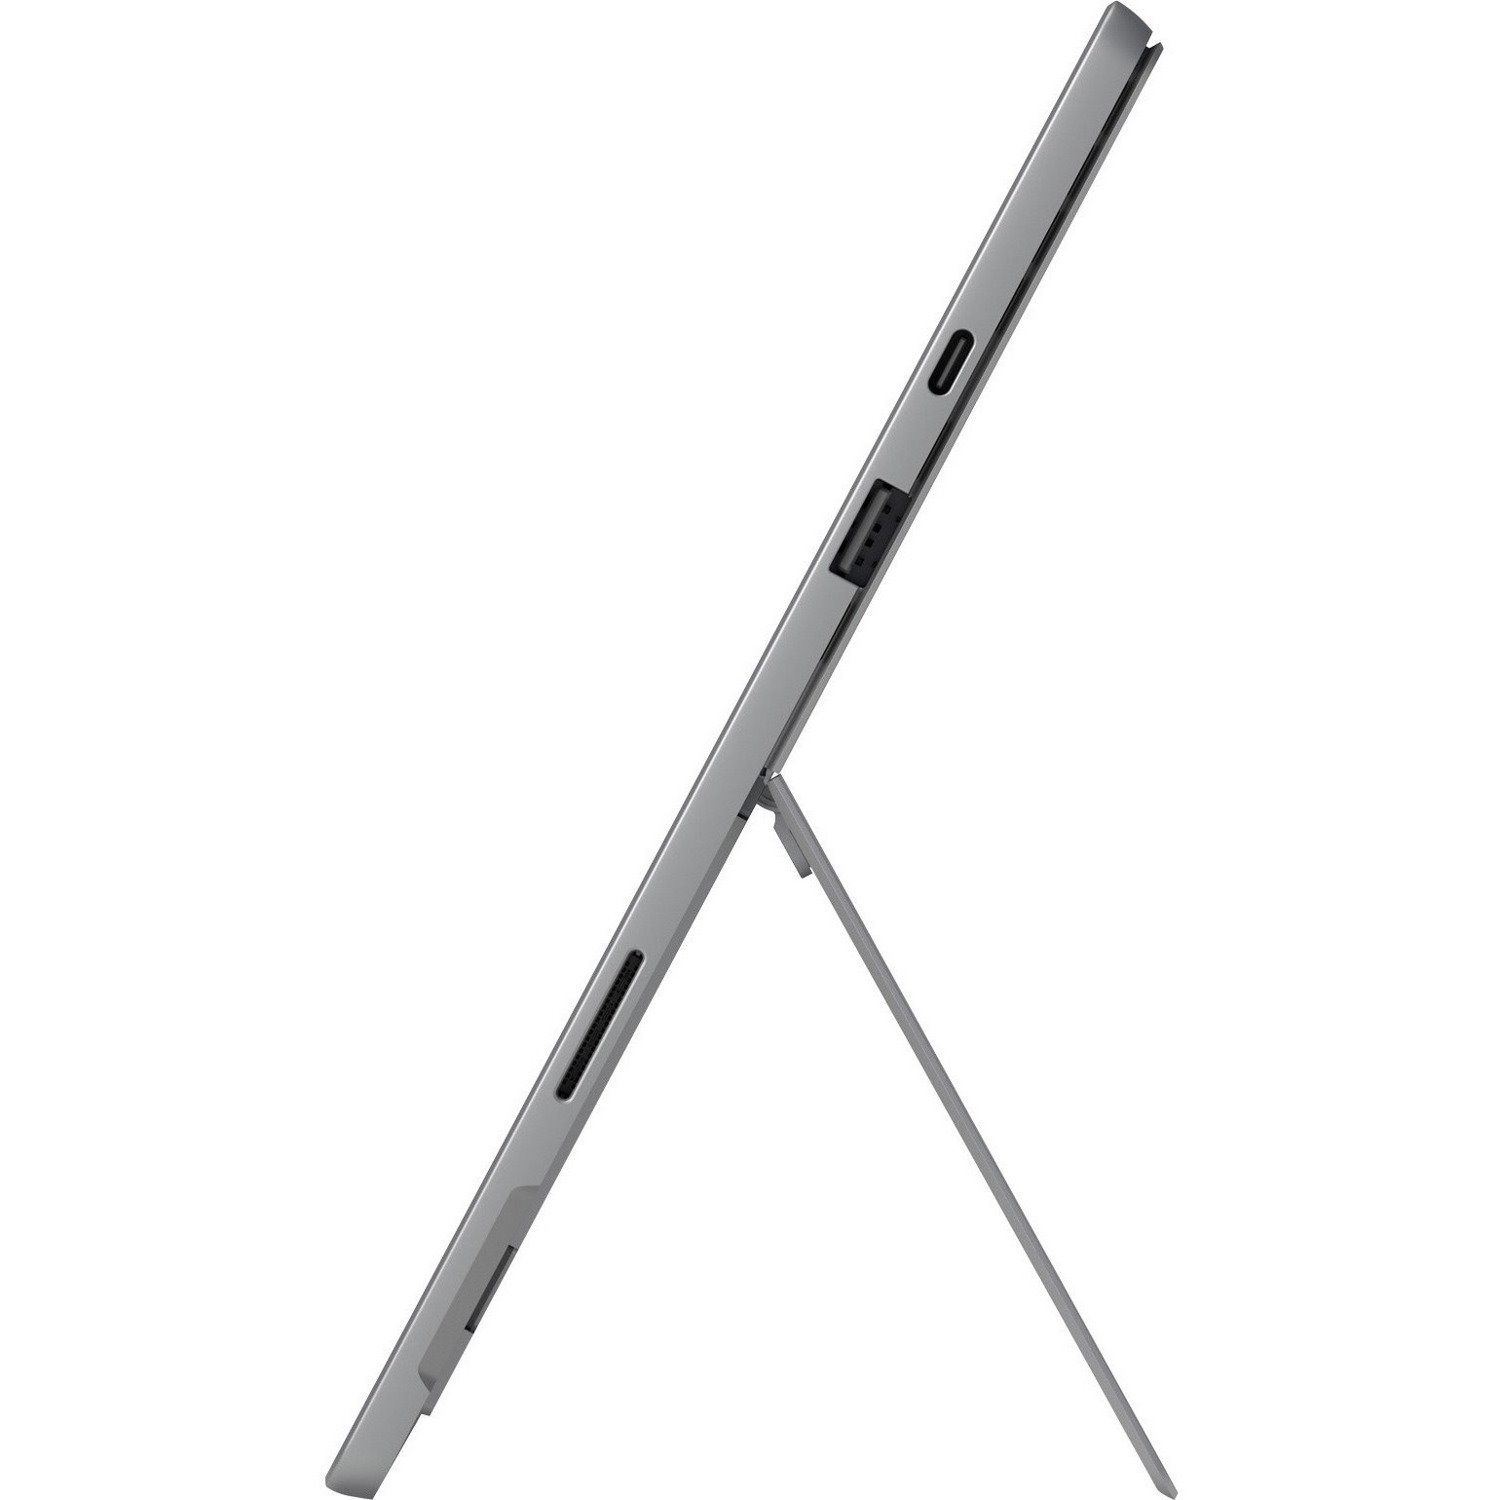 Microsoft Surface Pro 7+ Tablet - 12.3" - 16 GB - 256 GB SSD - Windows 10 Pro - Platinum